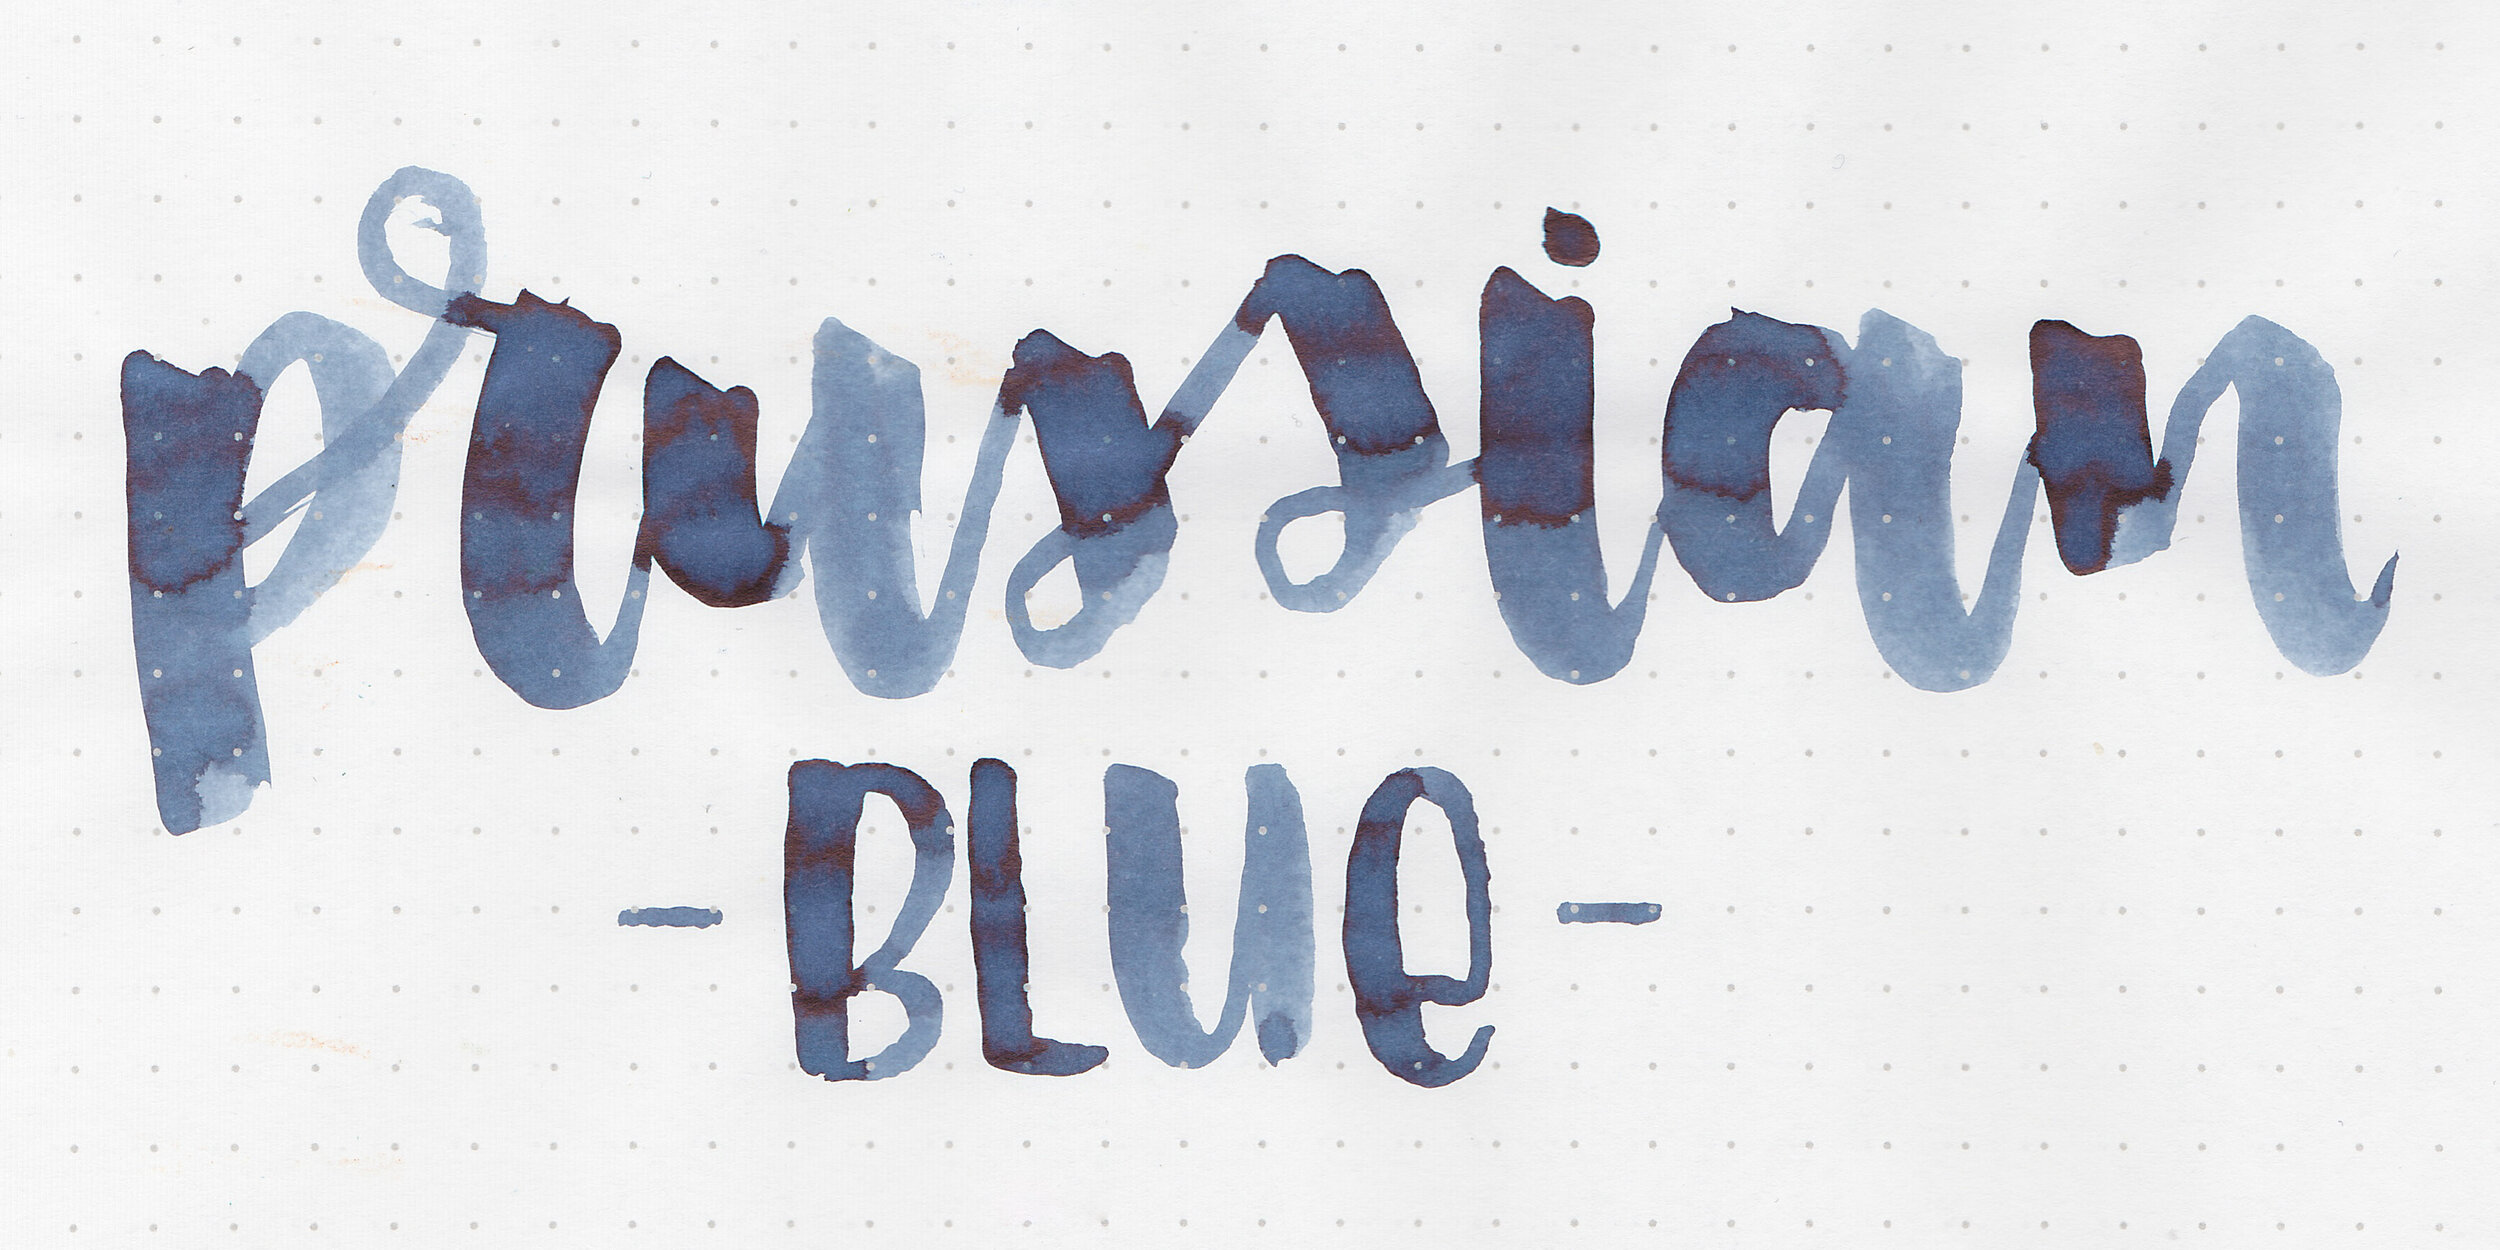 Diamine Prussian Blue - Ink Sample